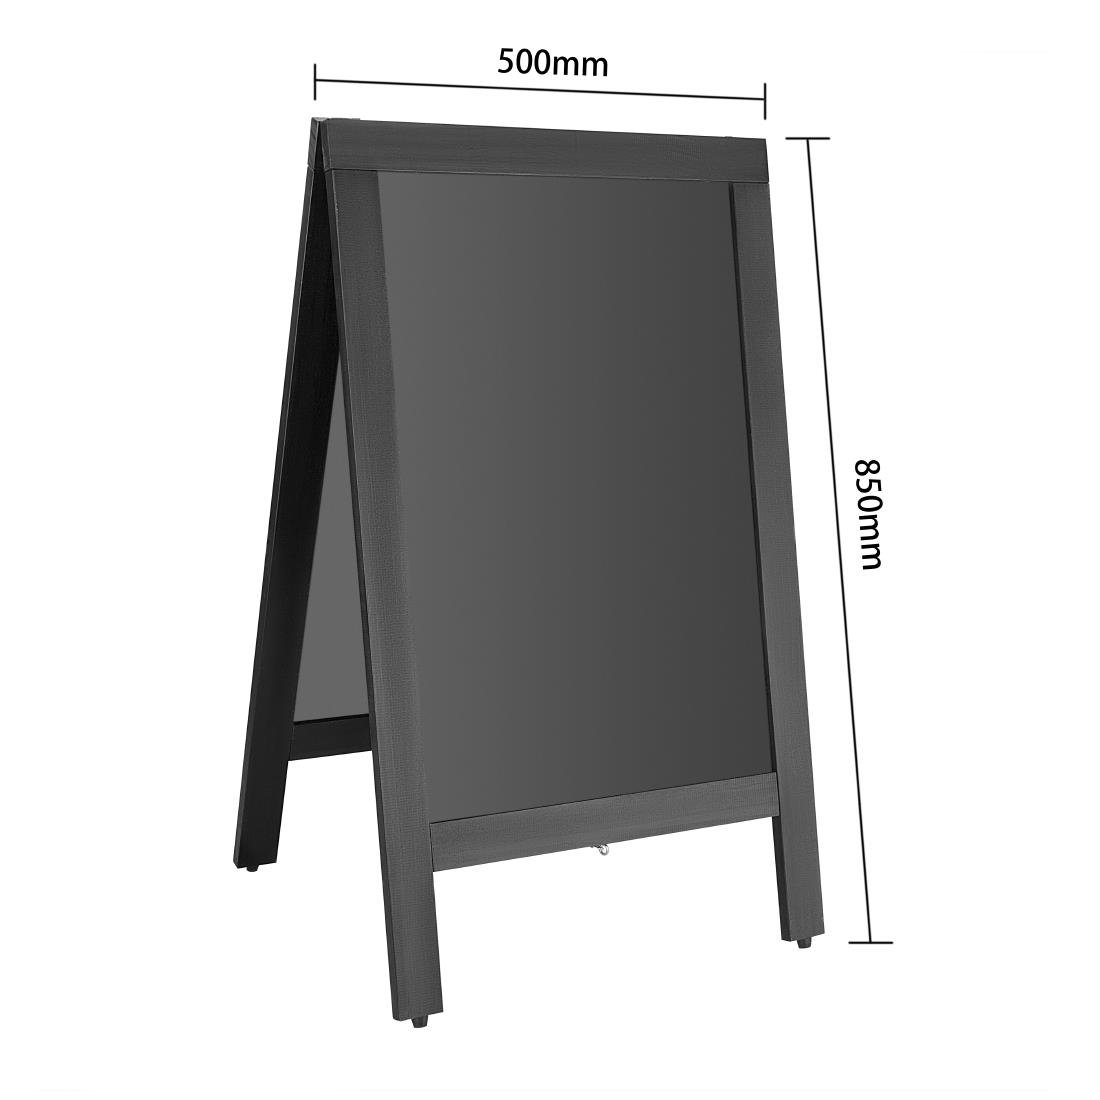 Olympia stoepplank zwart houten frame 500x850mm